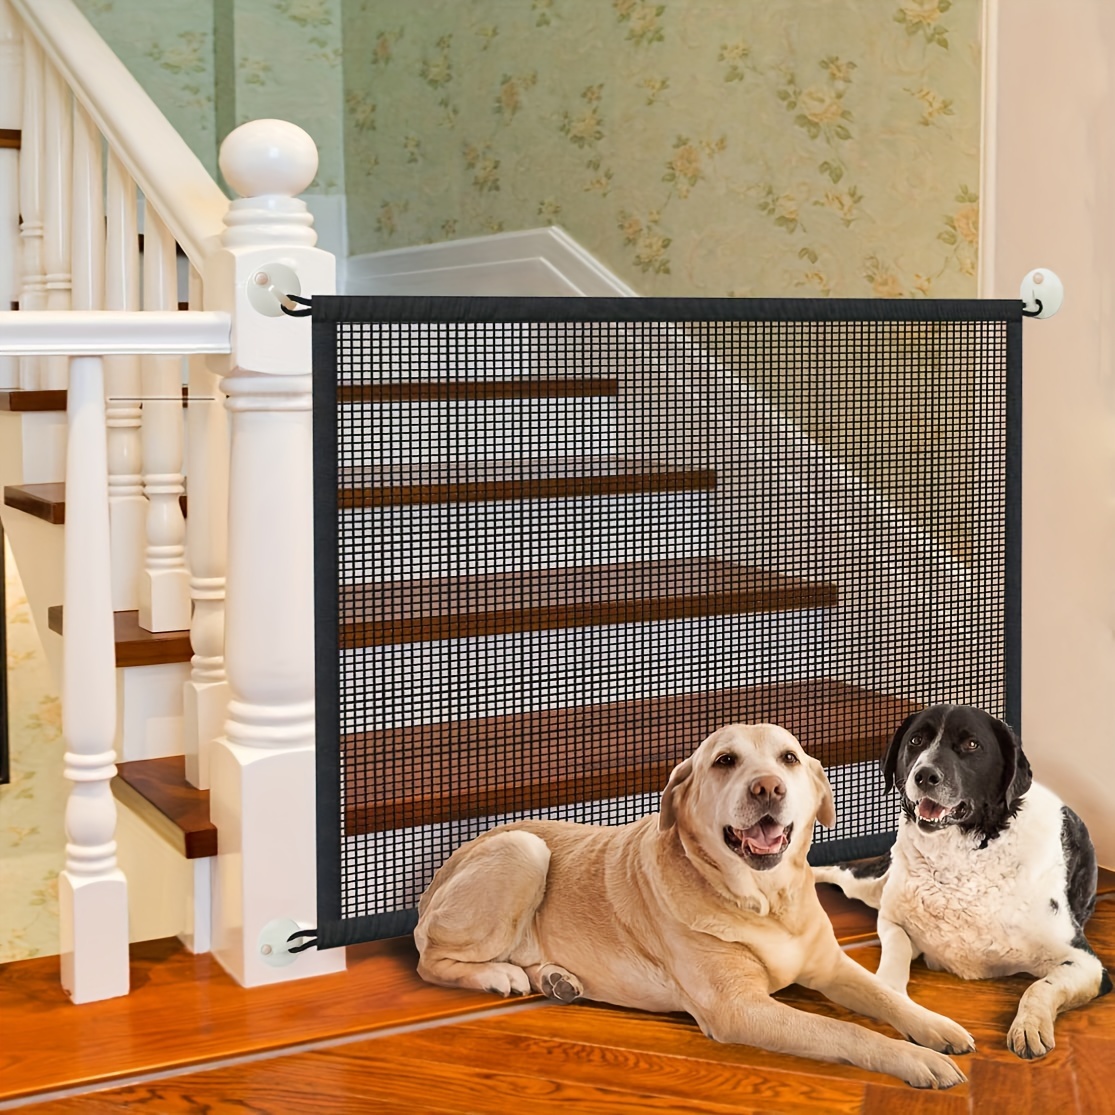 Escaleras plegables para mascotas para interiores/exteriores es